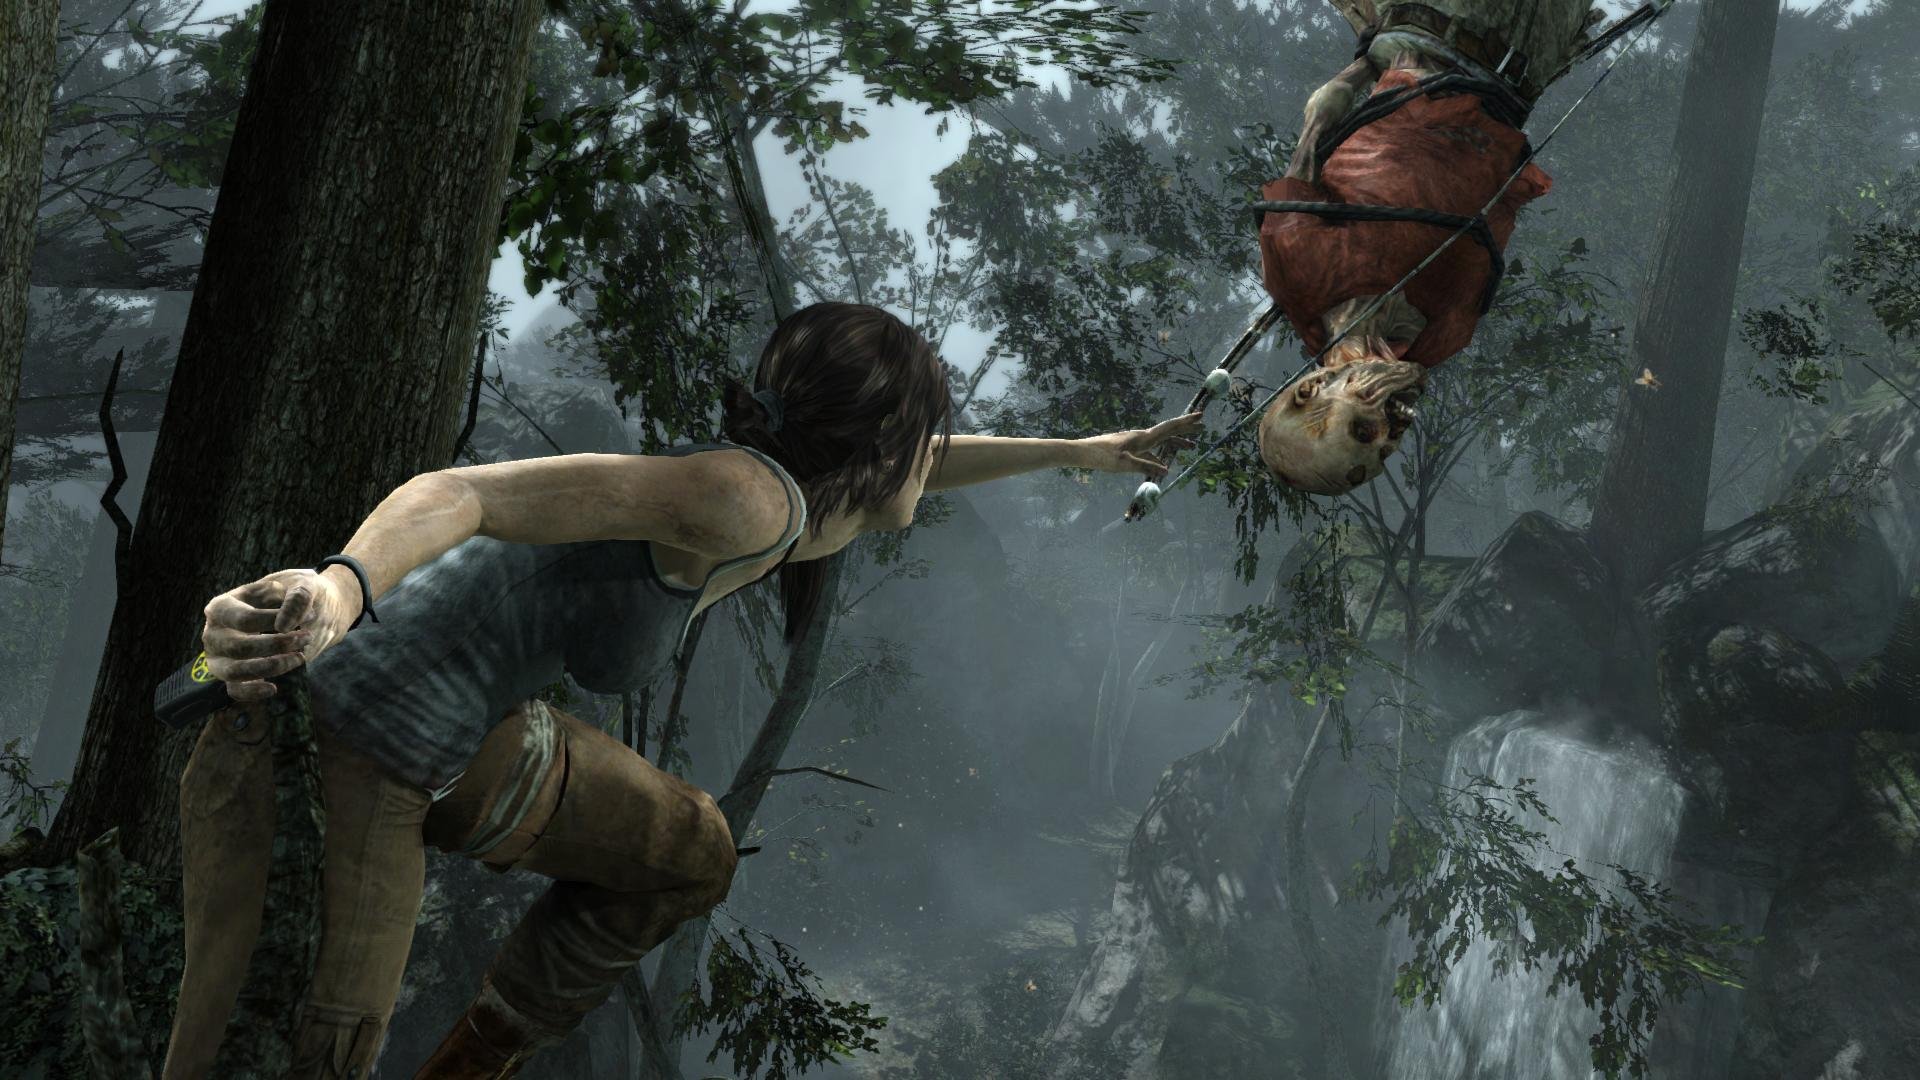 Lara croft deaths